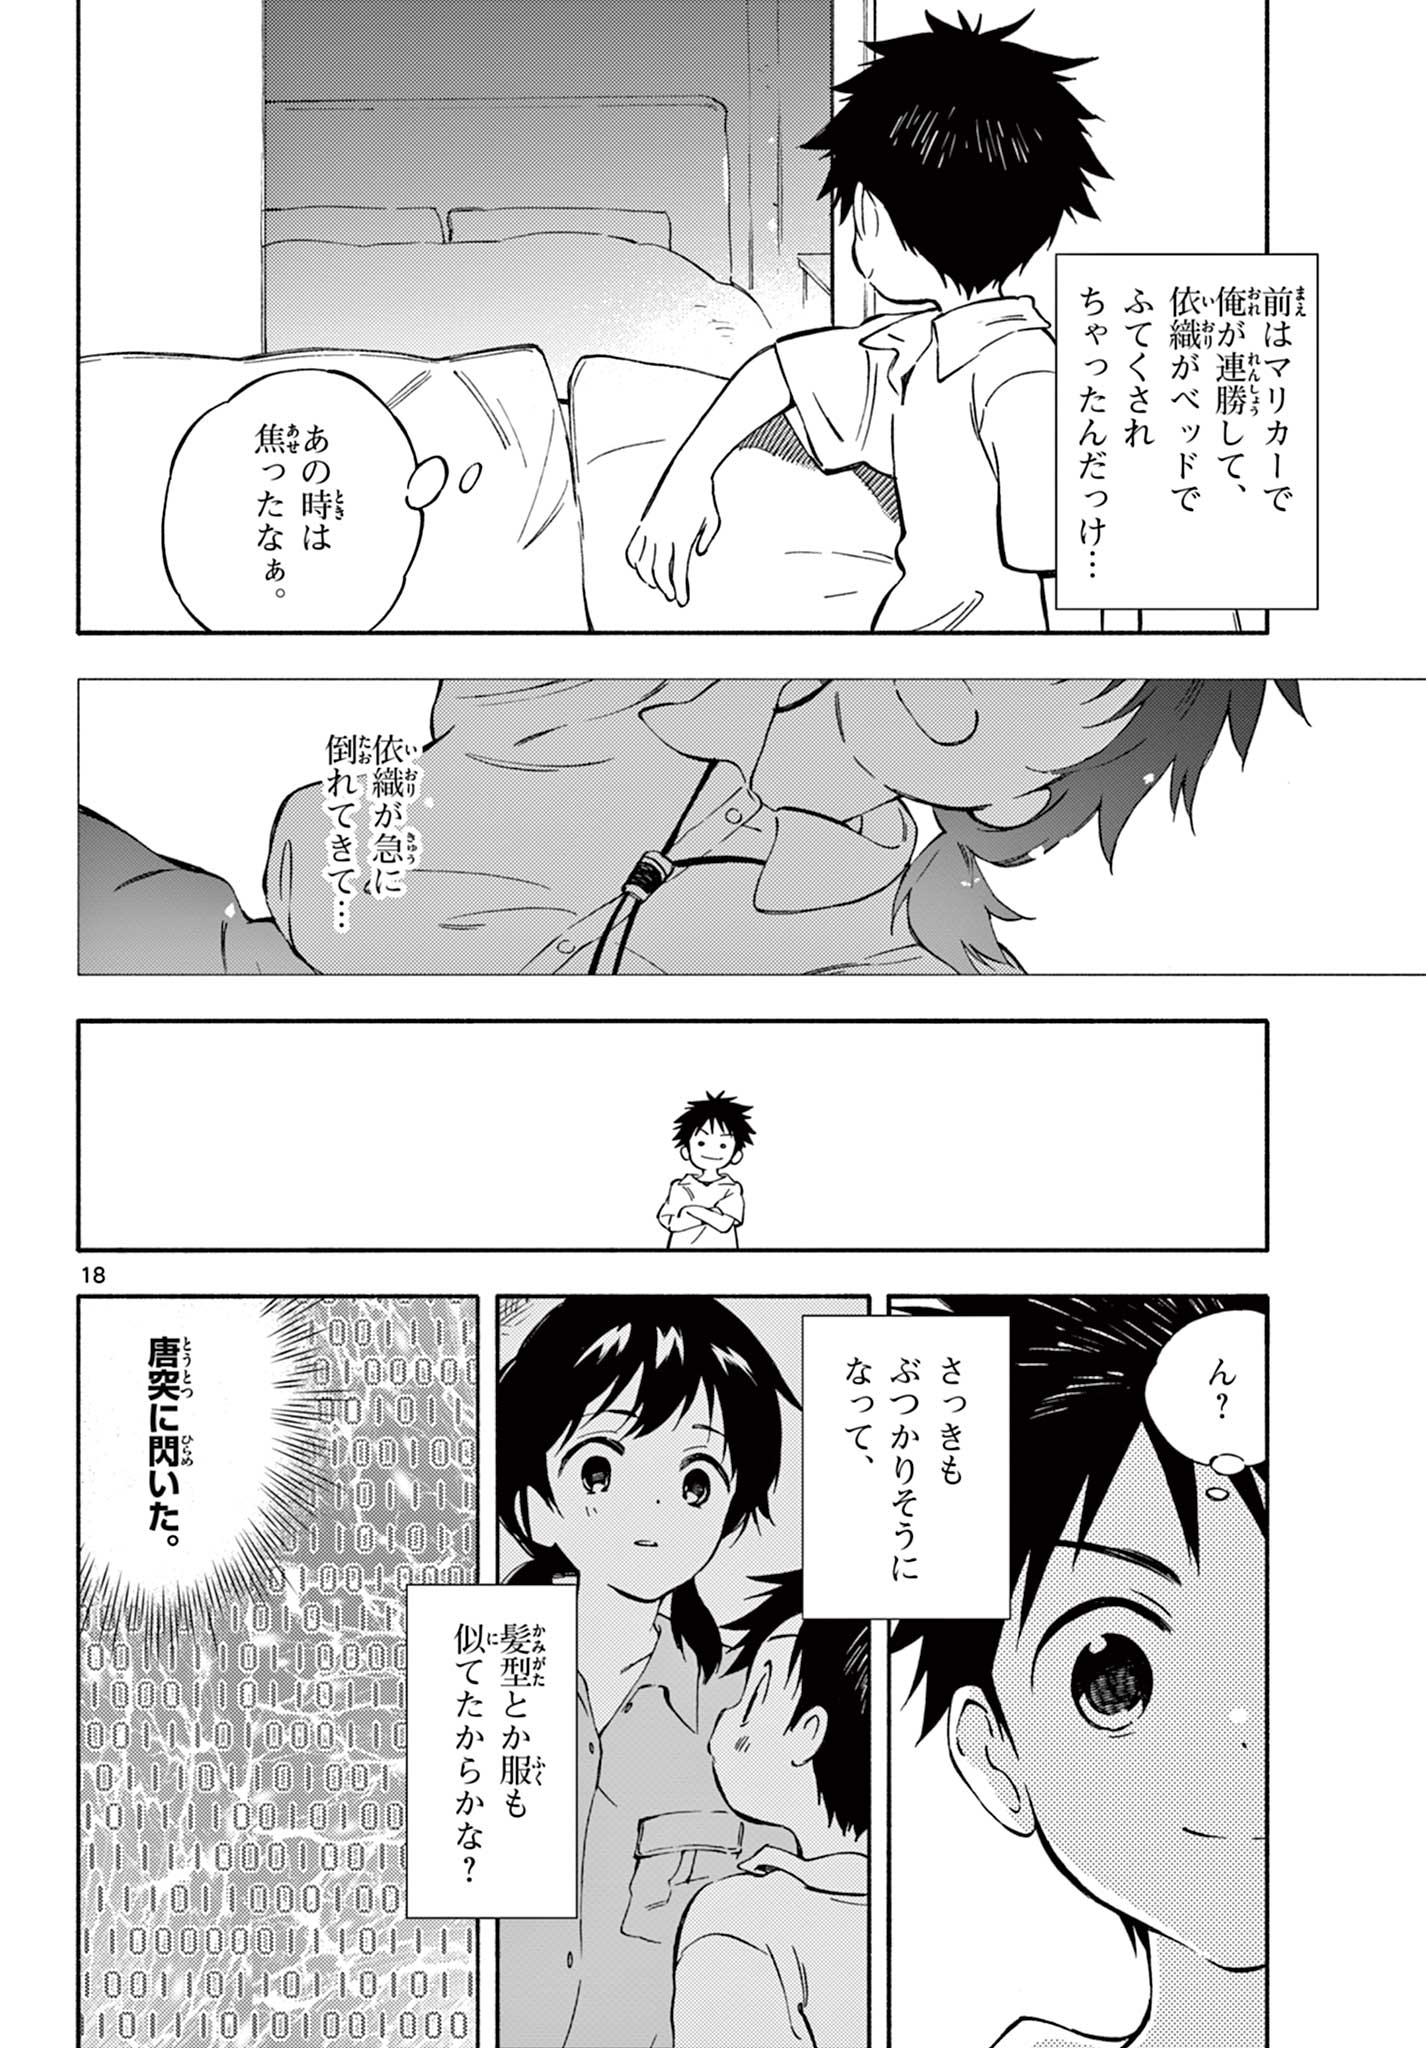 Nami no Shijima no Horizont - Chapter 12.2 - Page 4